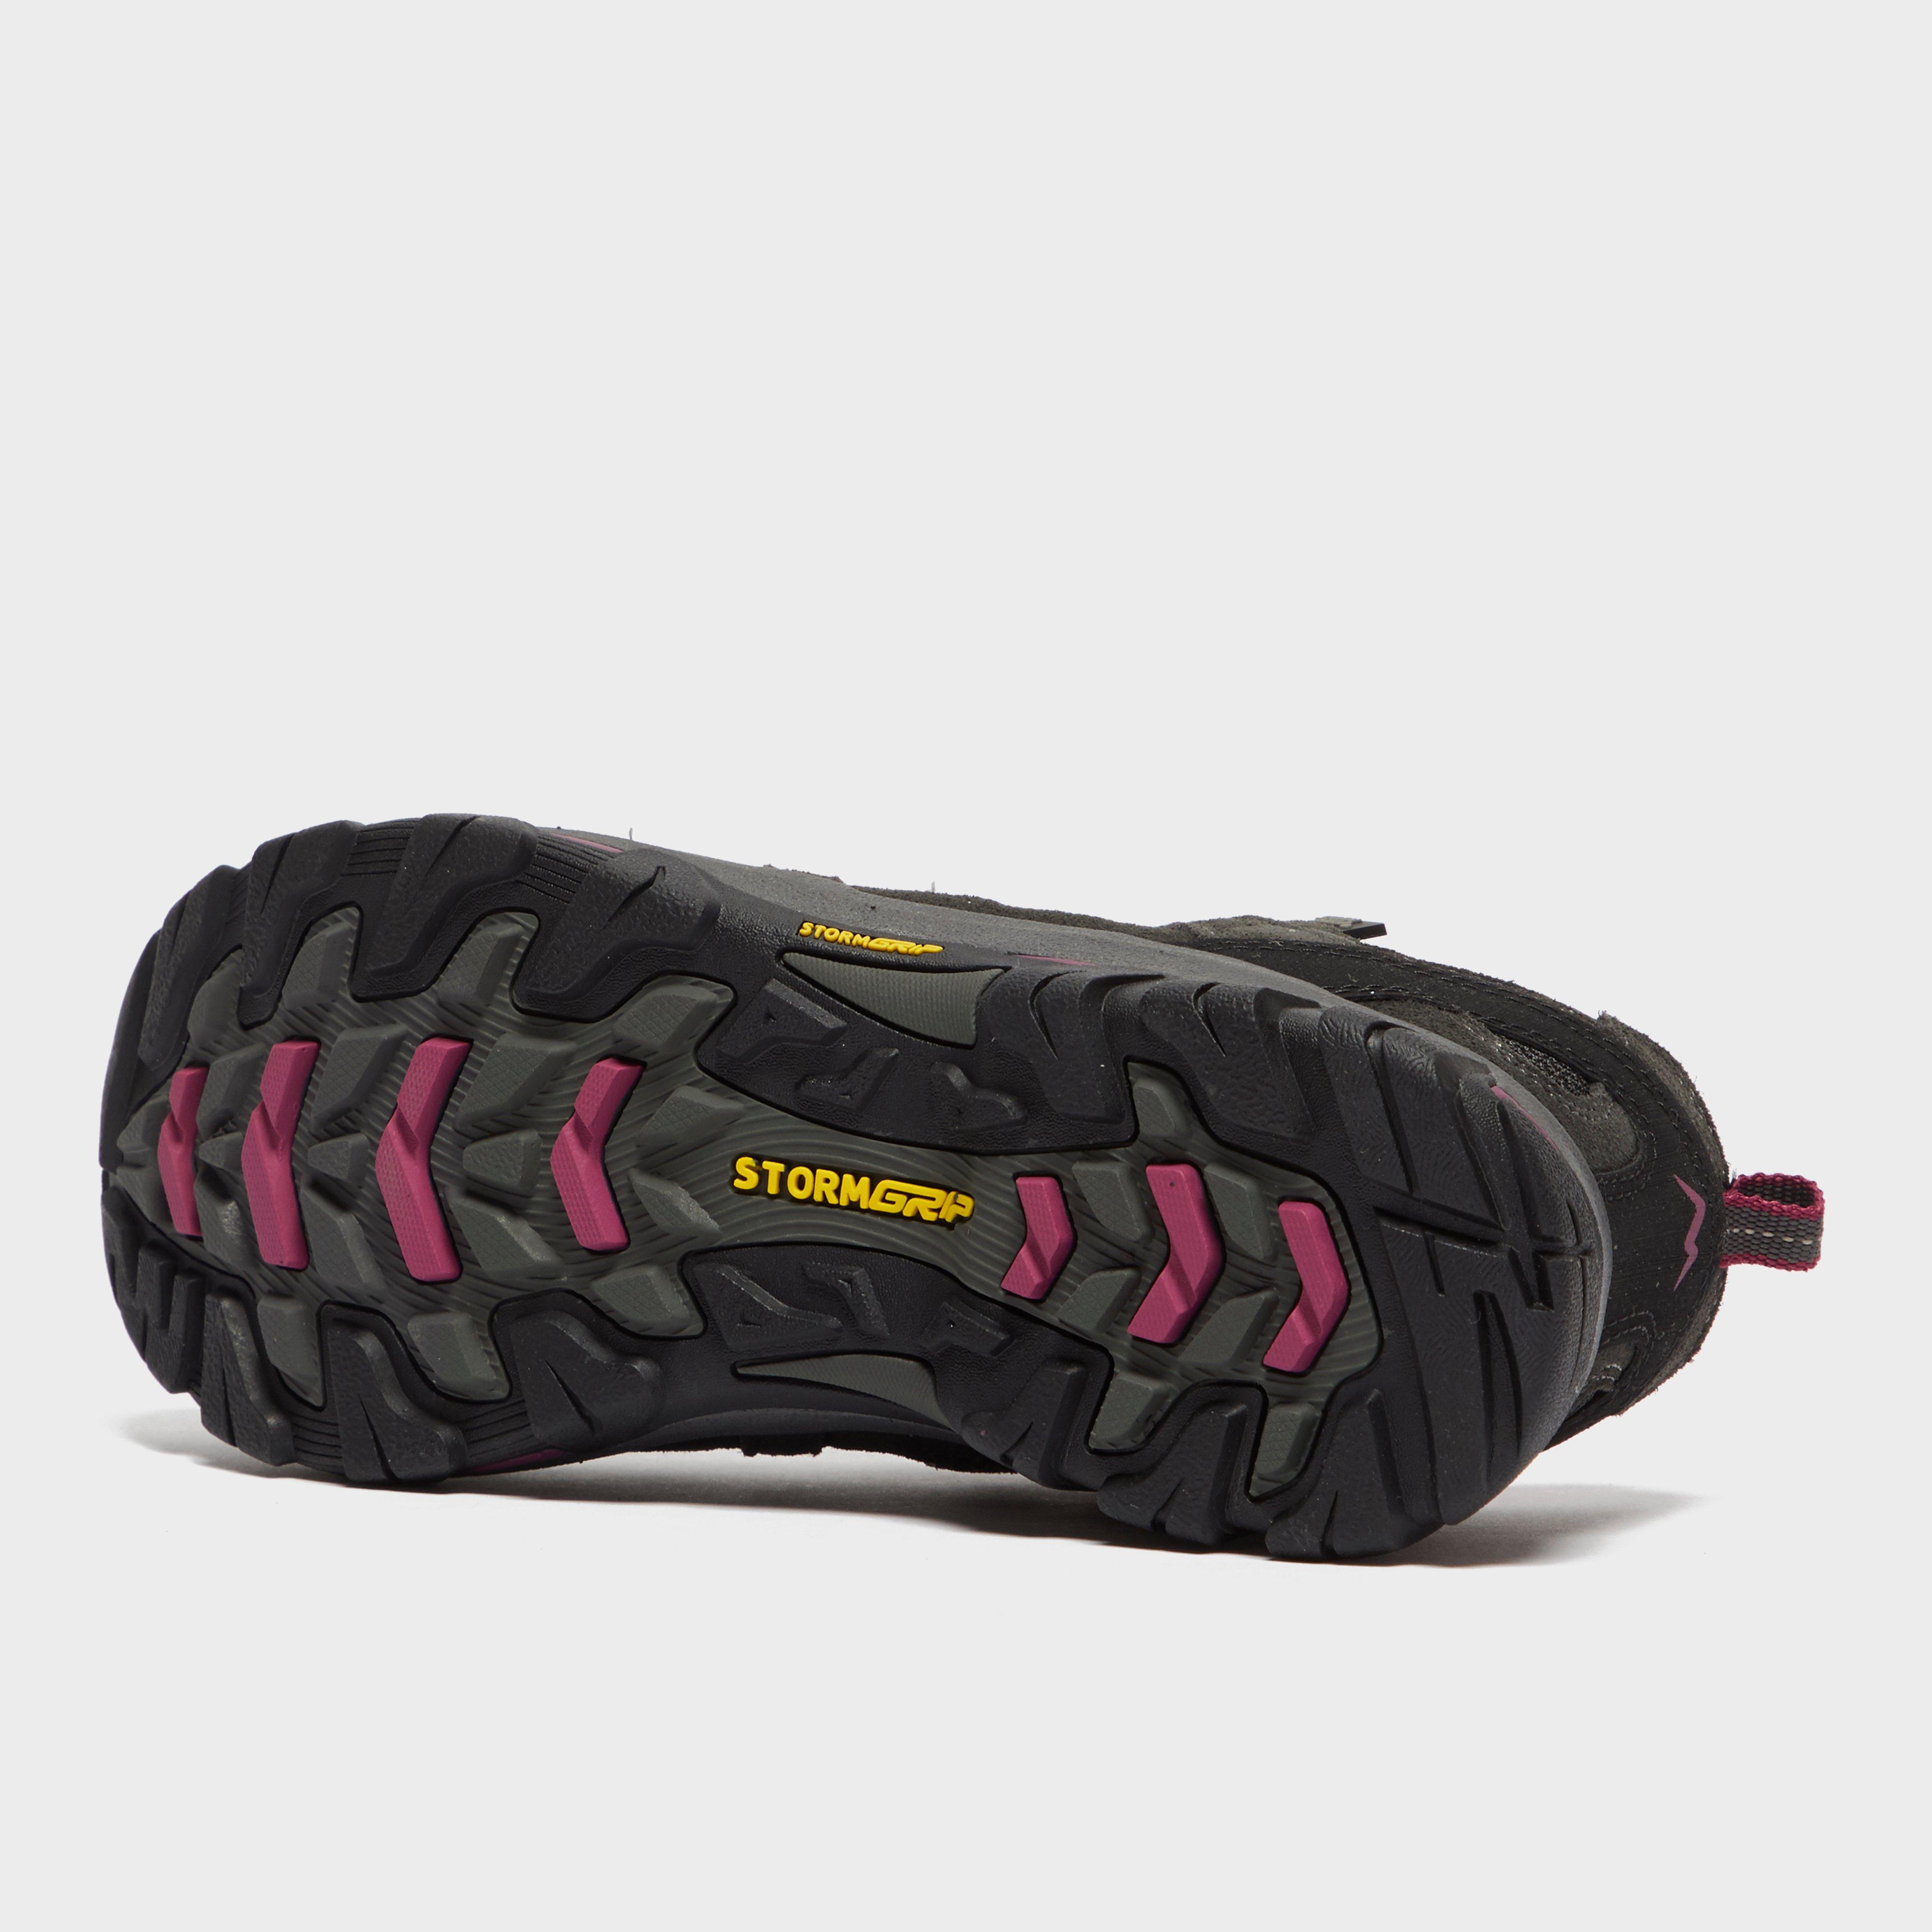 Peter Storm Women's Arnside Waterproof Walking Shoes Review